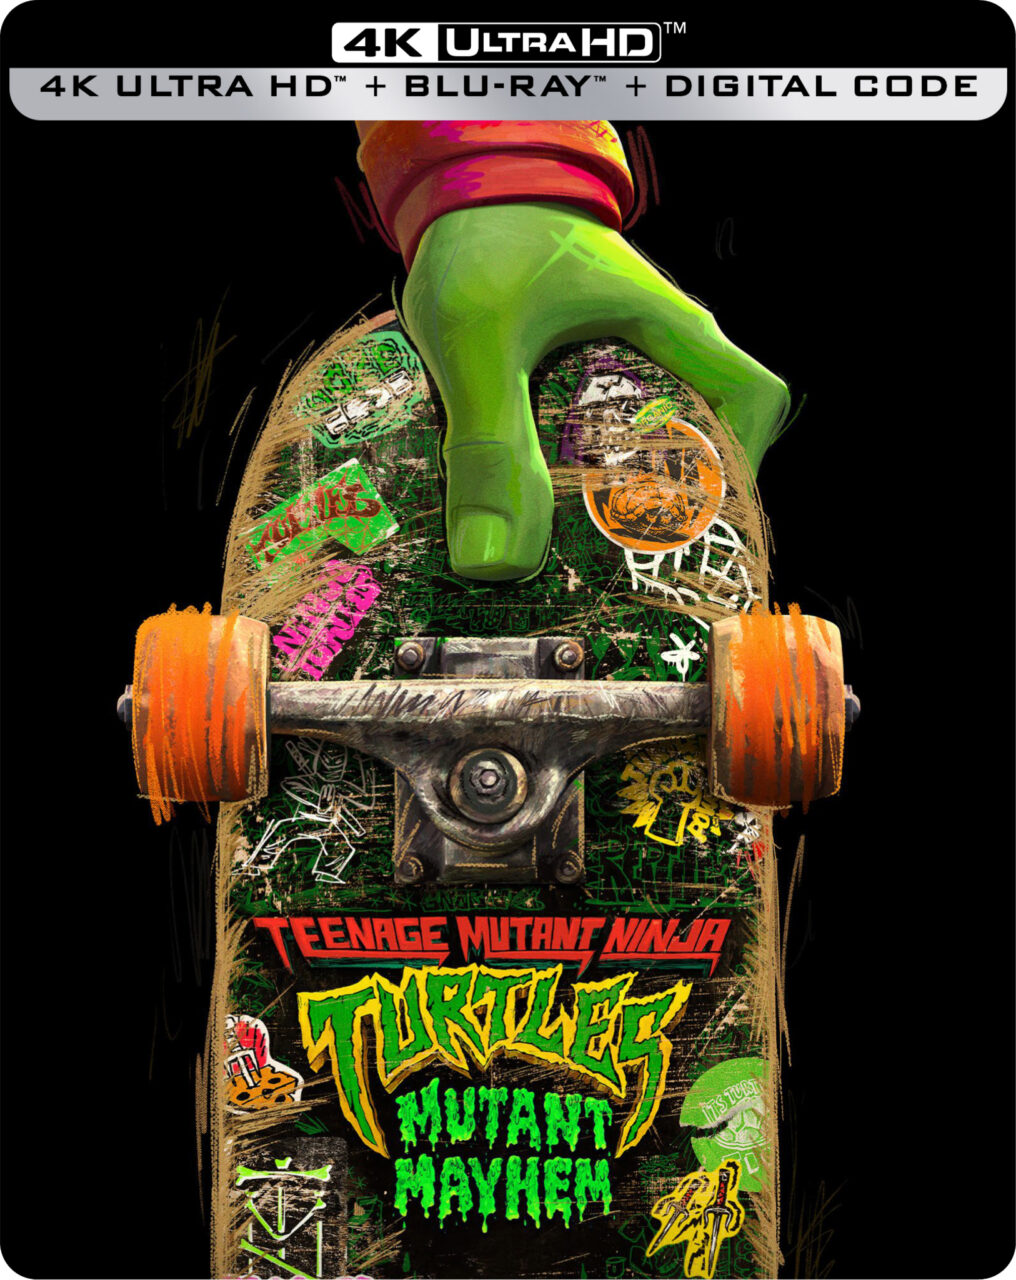 Teenage Mutant Ninja Turtles Mutant Mayhem 4K Ultra HD Combo pack cover (Paramount Home Entertainment)